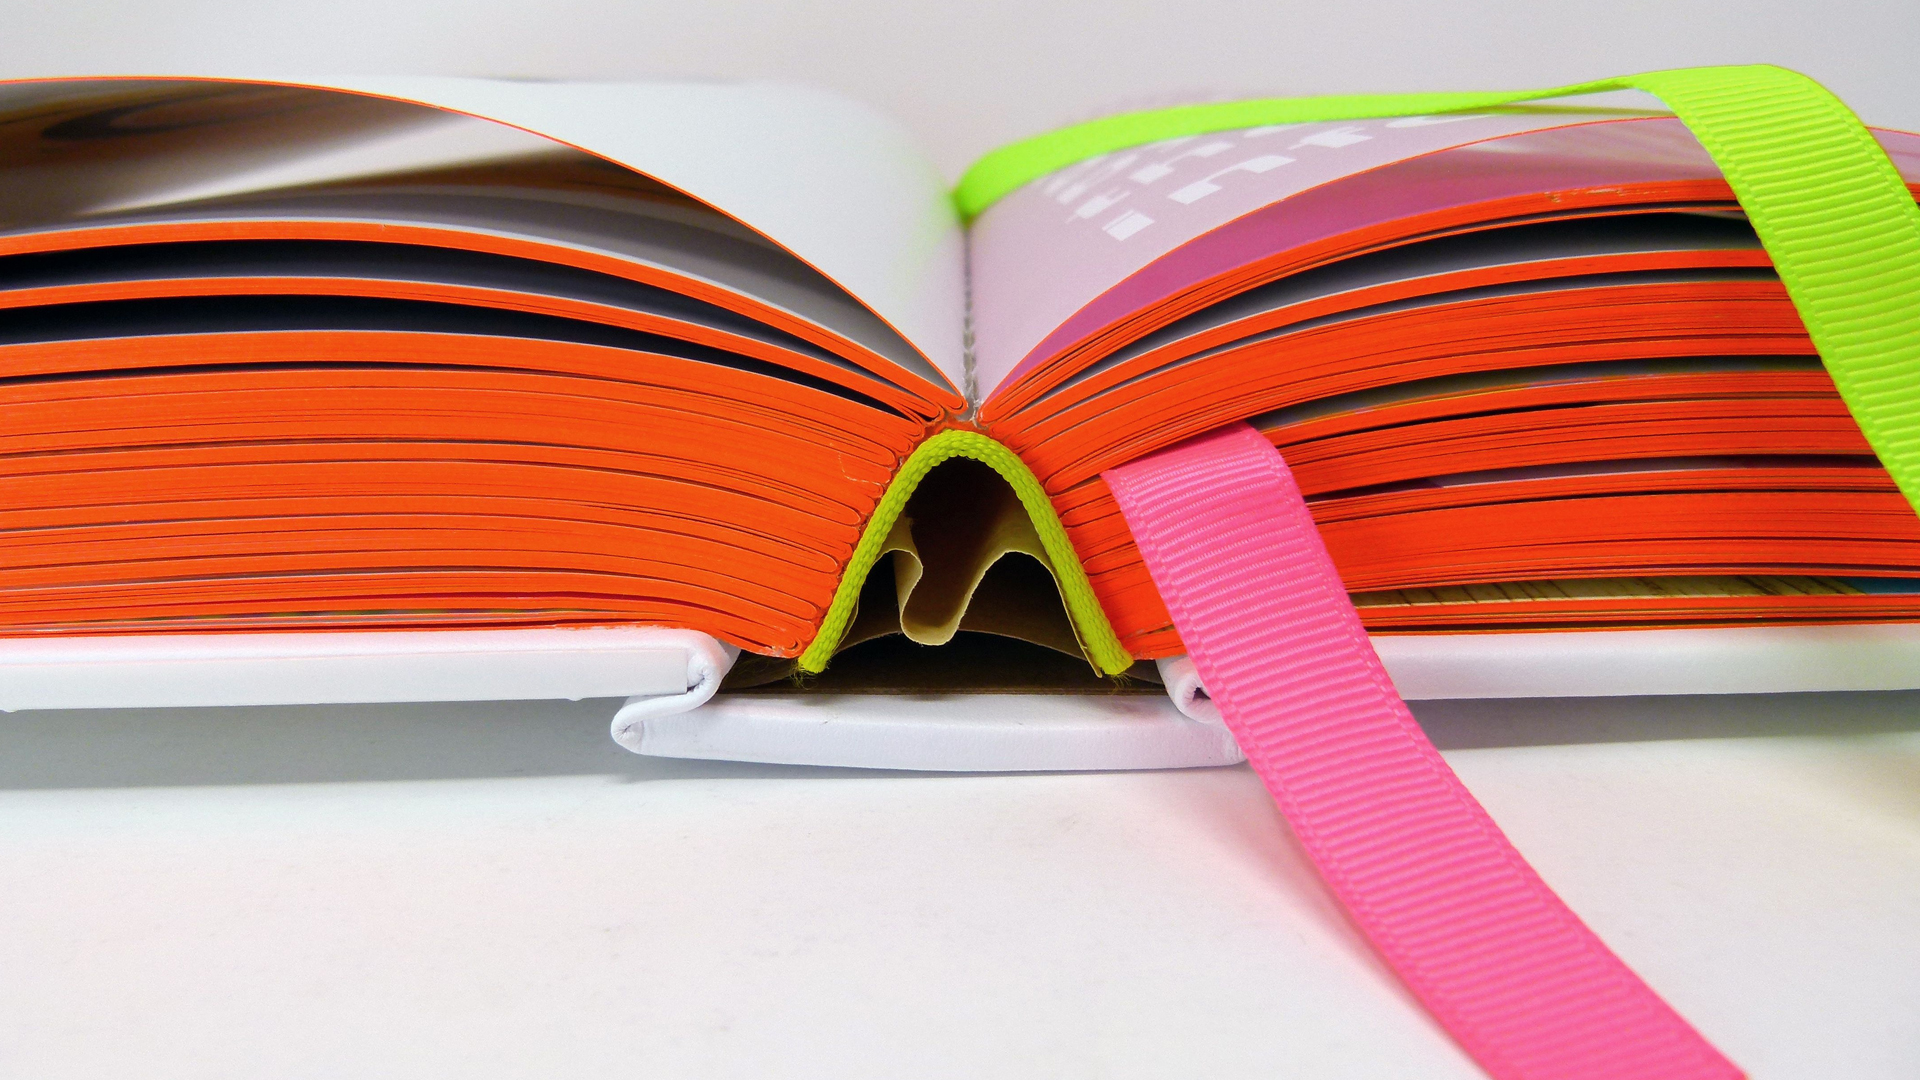 Gripping Book Design - ‘Morla : Design’ Book - PaperSpecs